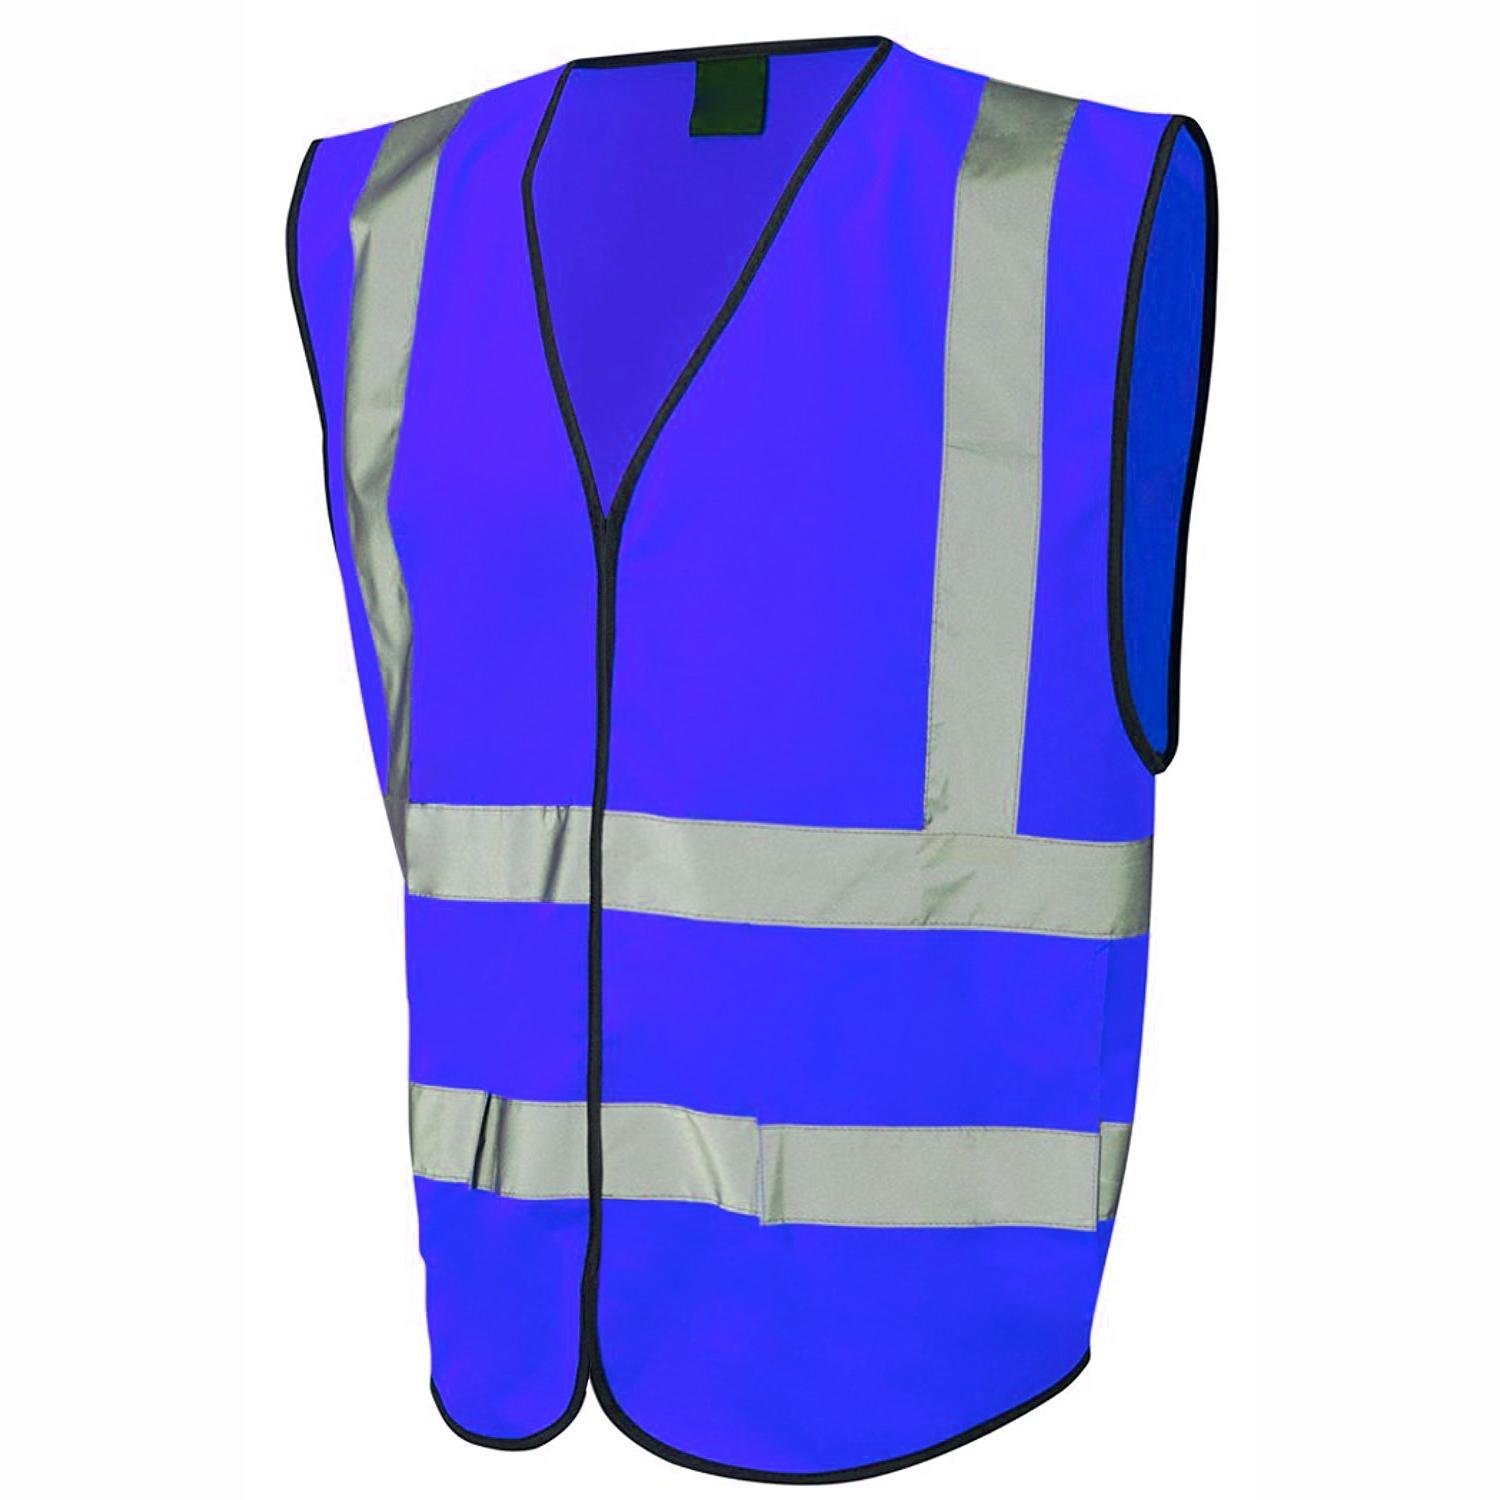 Blue Hi-Vis Safety Vest Jacket (Large) - £3.99 : Oypla - Stocking the very best in Toys ...